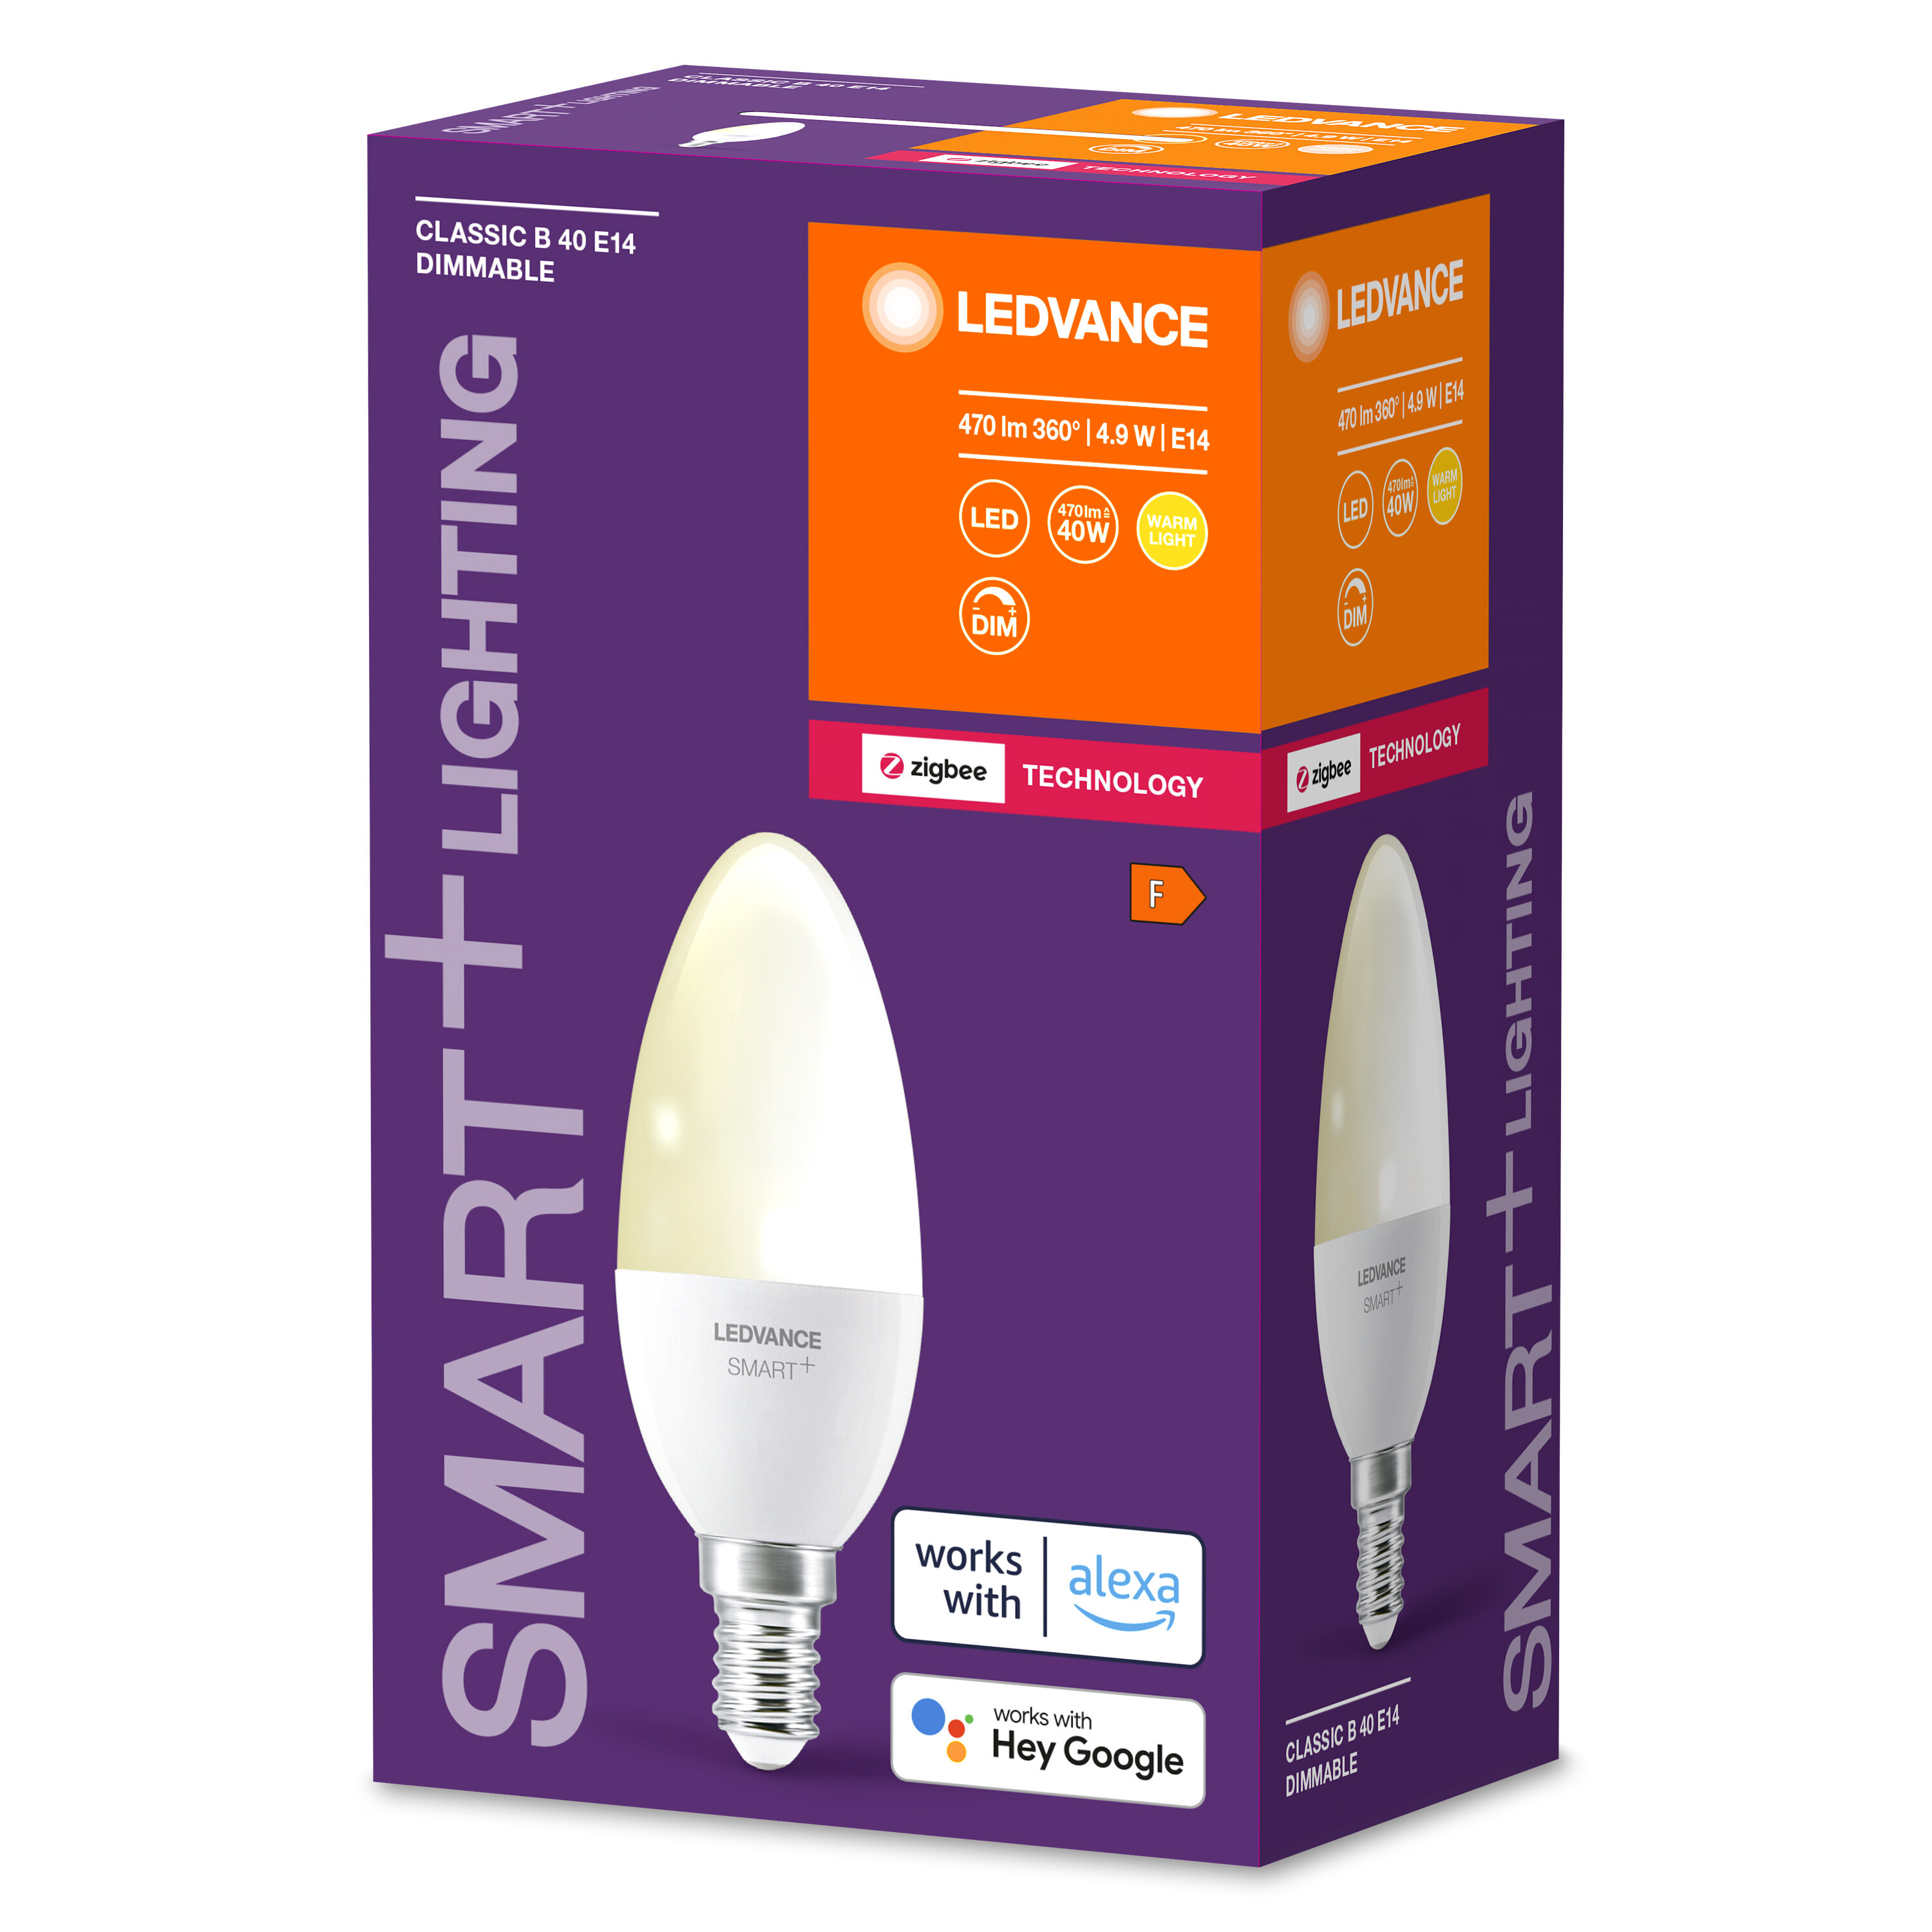 LEDVANCE SMART+ Classic Dimmable Smarte Lampe Warmweiß LED